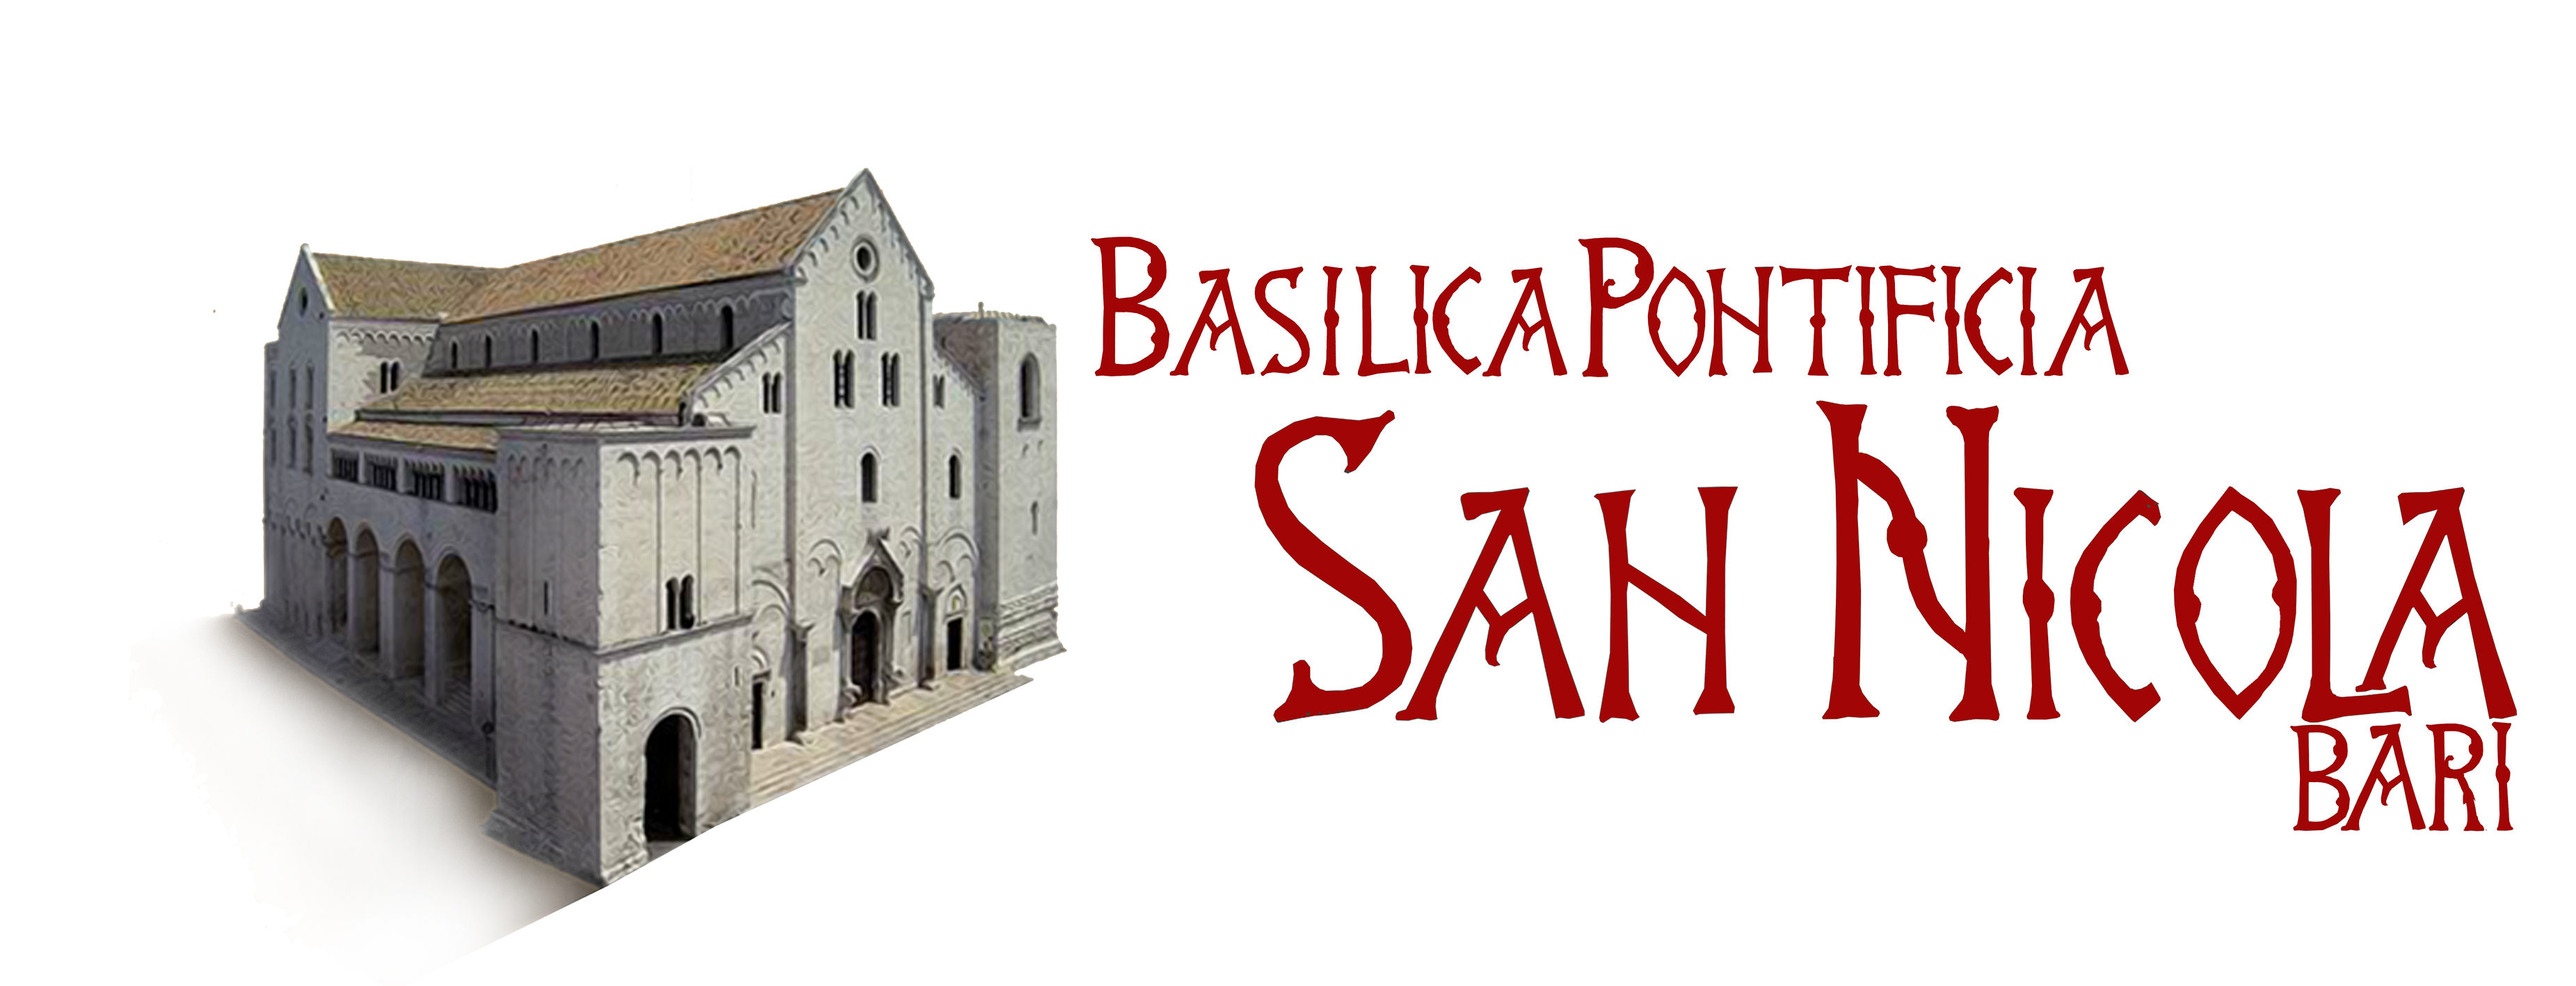 logo ufficiale basilica sannicola.jpg